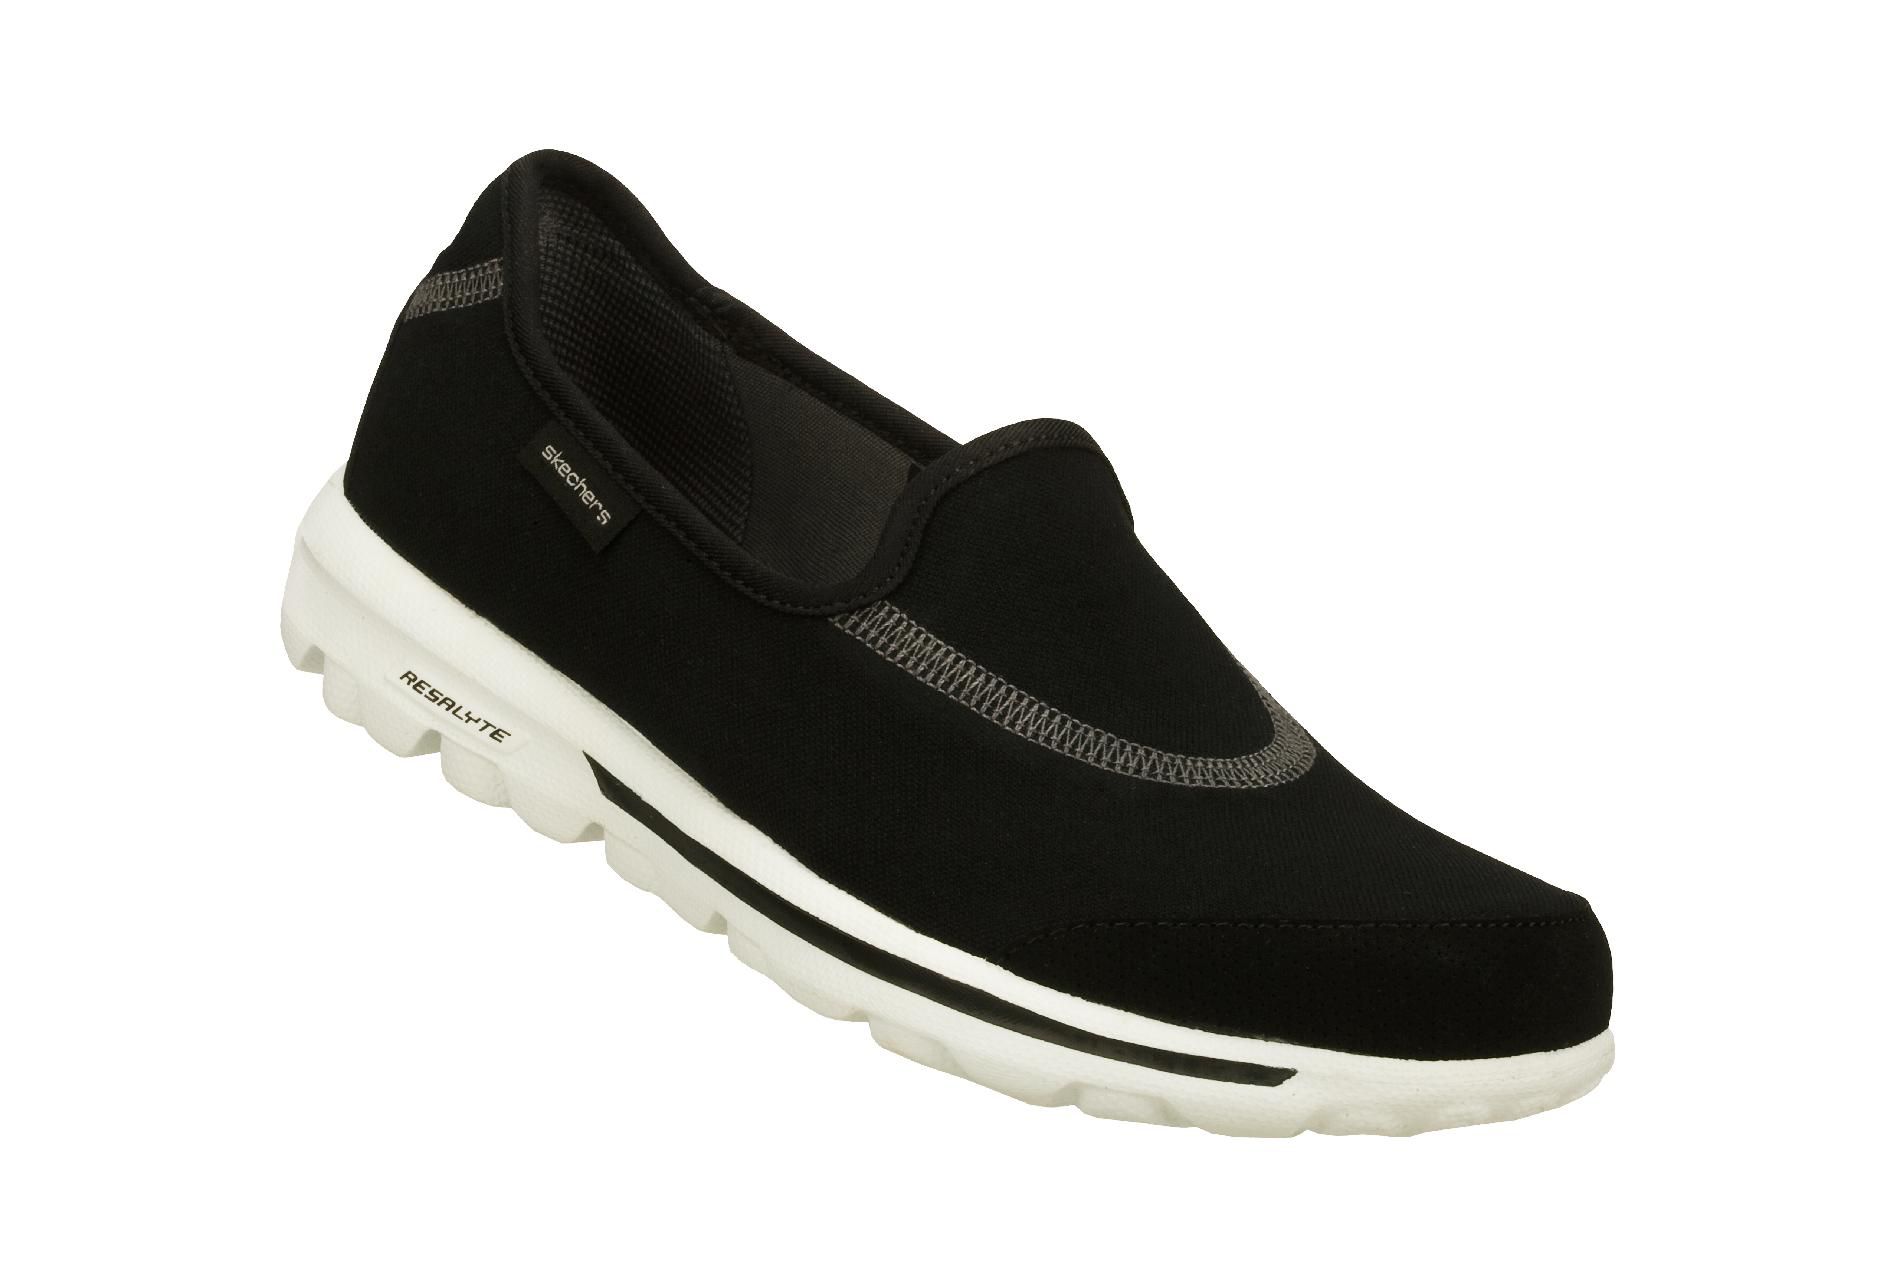 Skechers Women's GOwalk Casual Athletic Shoe Medium and Wide Width - Black